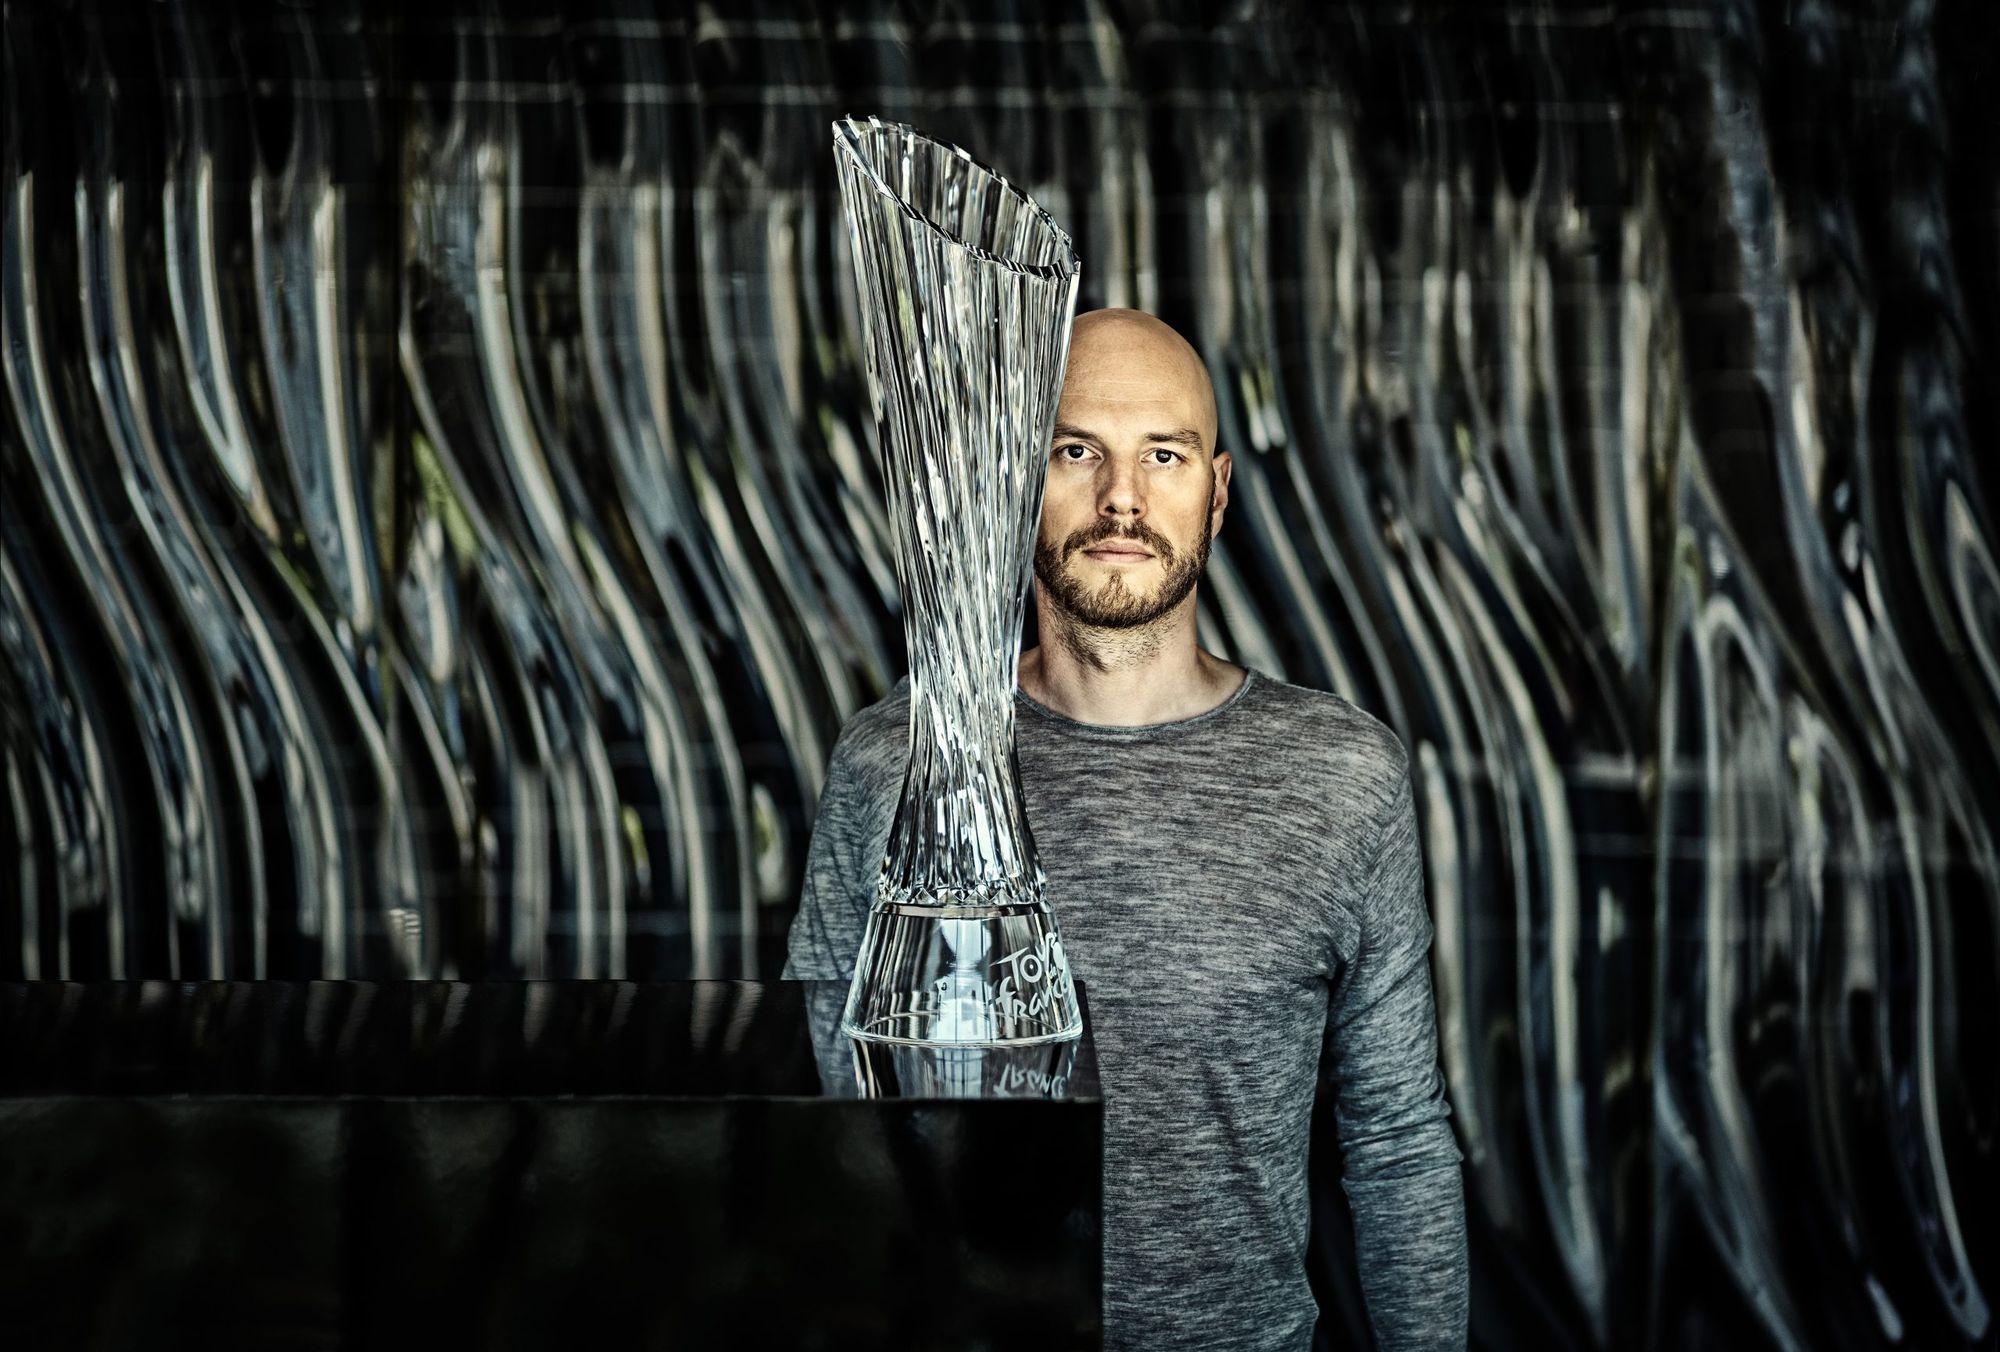 Czech LASVIT designed the trophy for the winner of the Tour de France